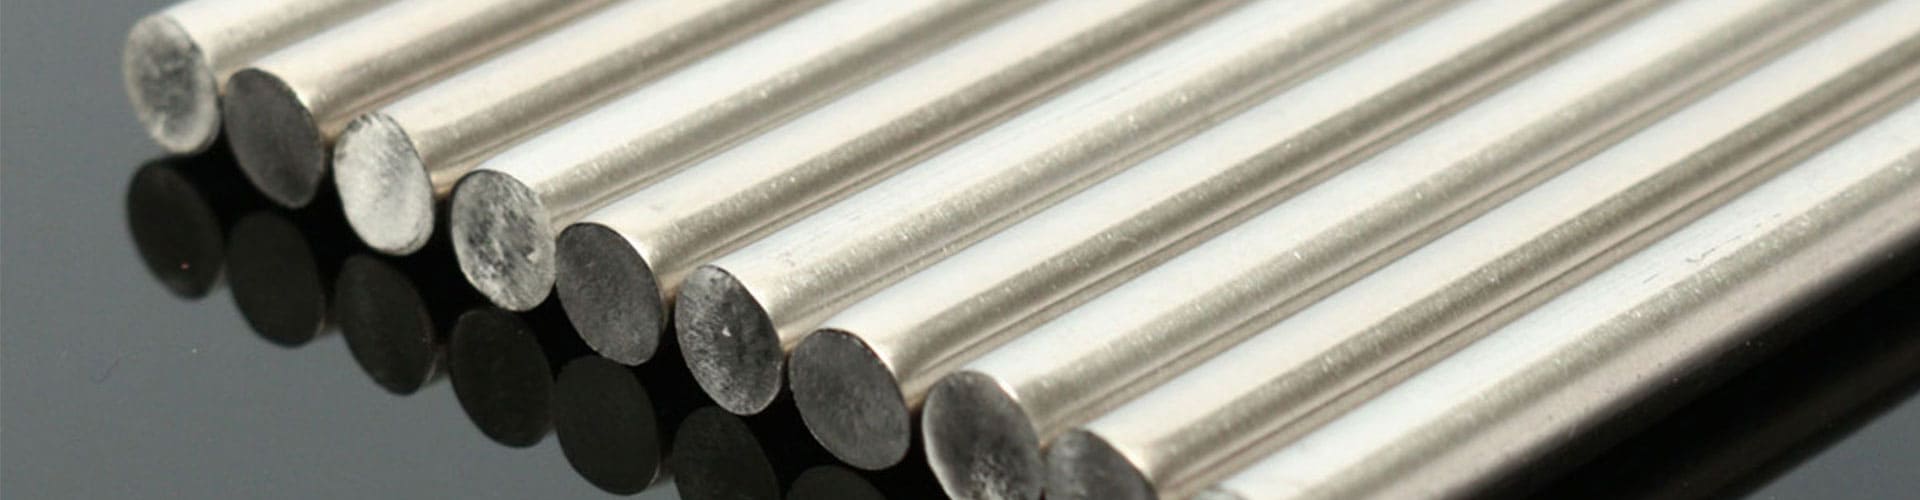 nickel-alloy-201-round-bars-rods-manufacturer-exporter-supplier-in-spain